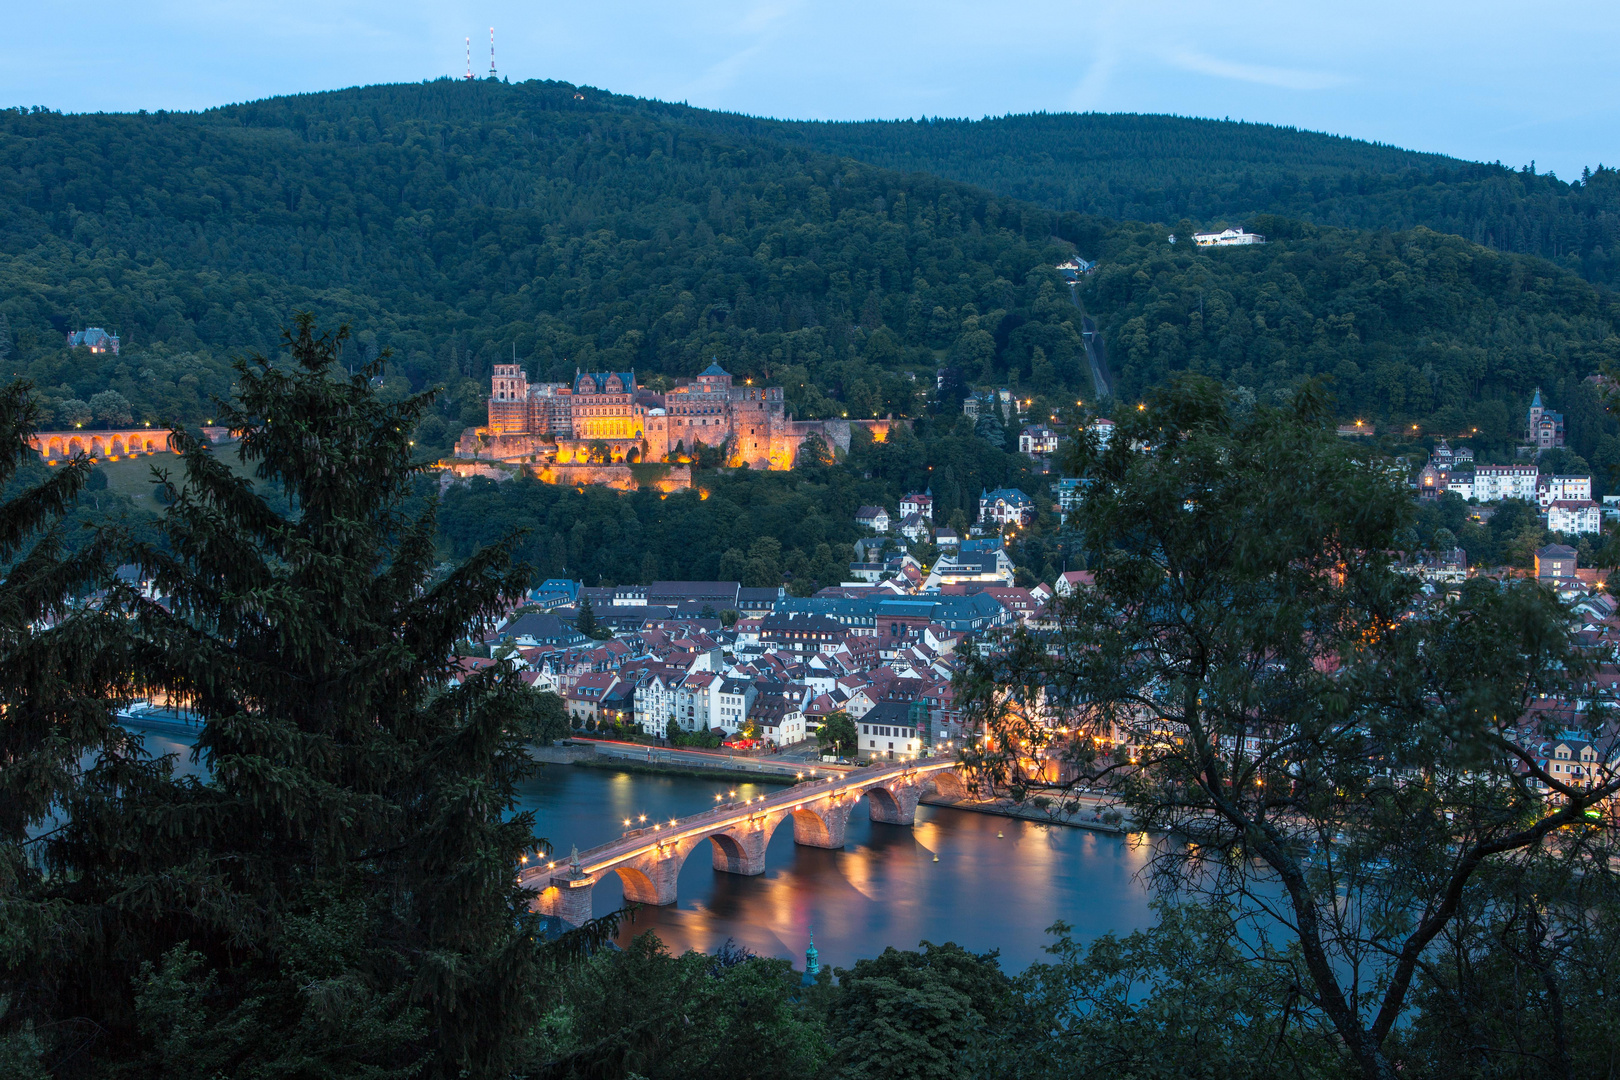 Heidelberger Schlossruine